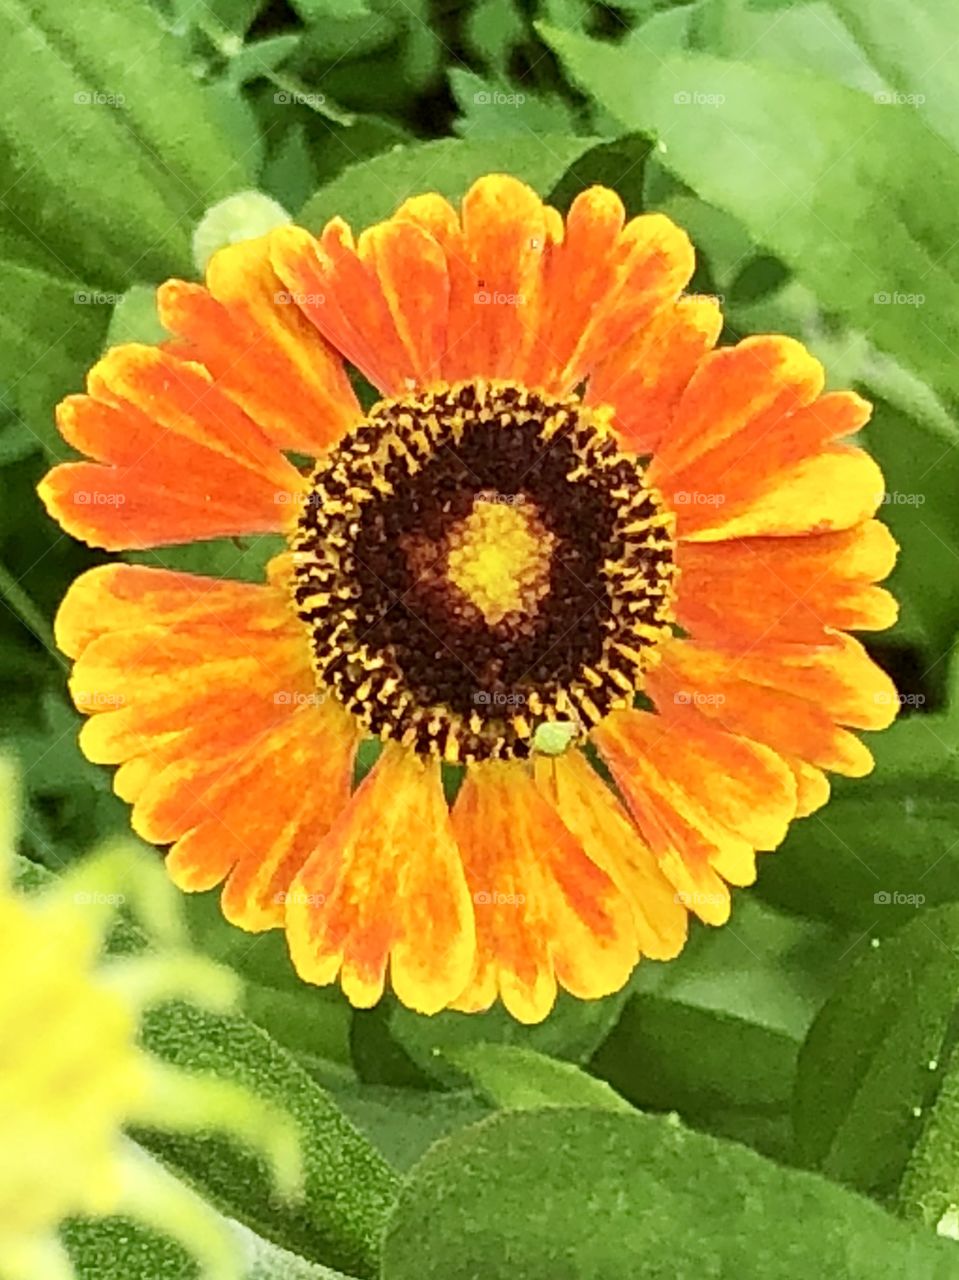 Sunny orange and yellow flower